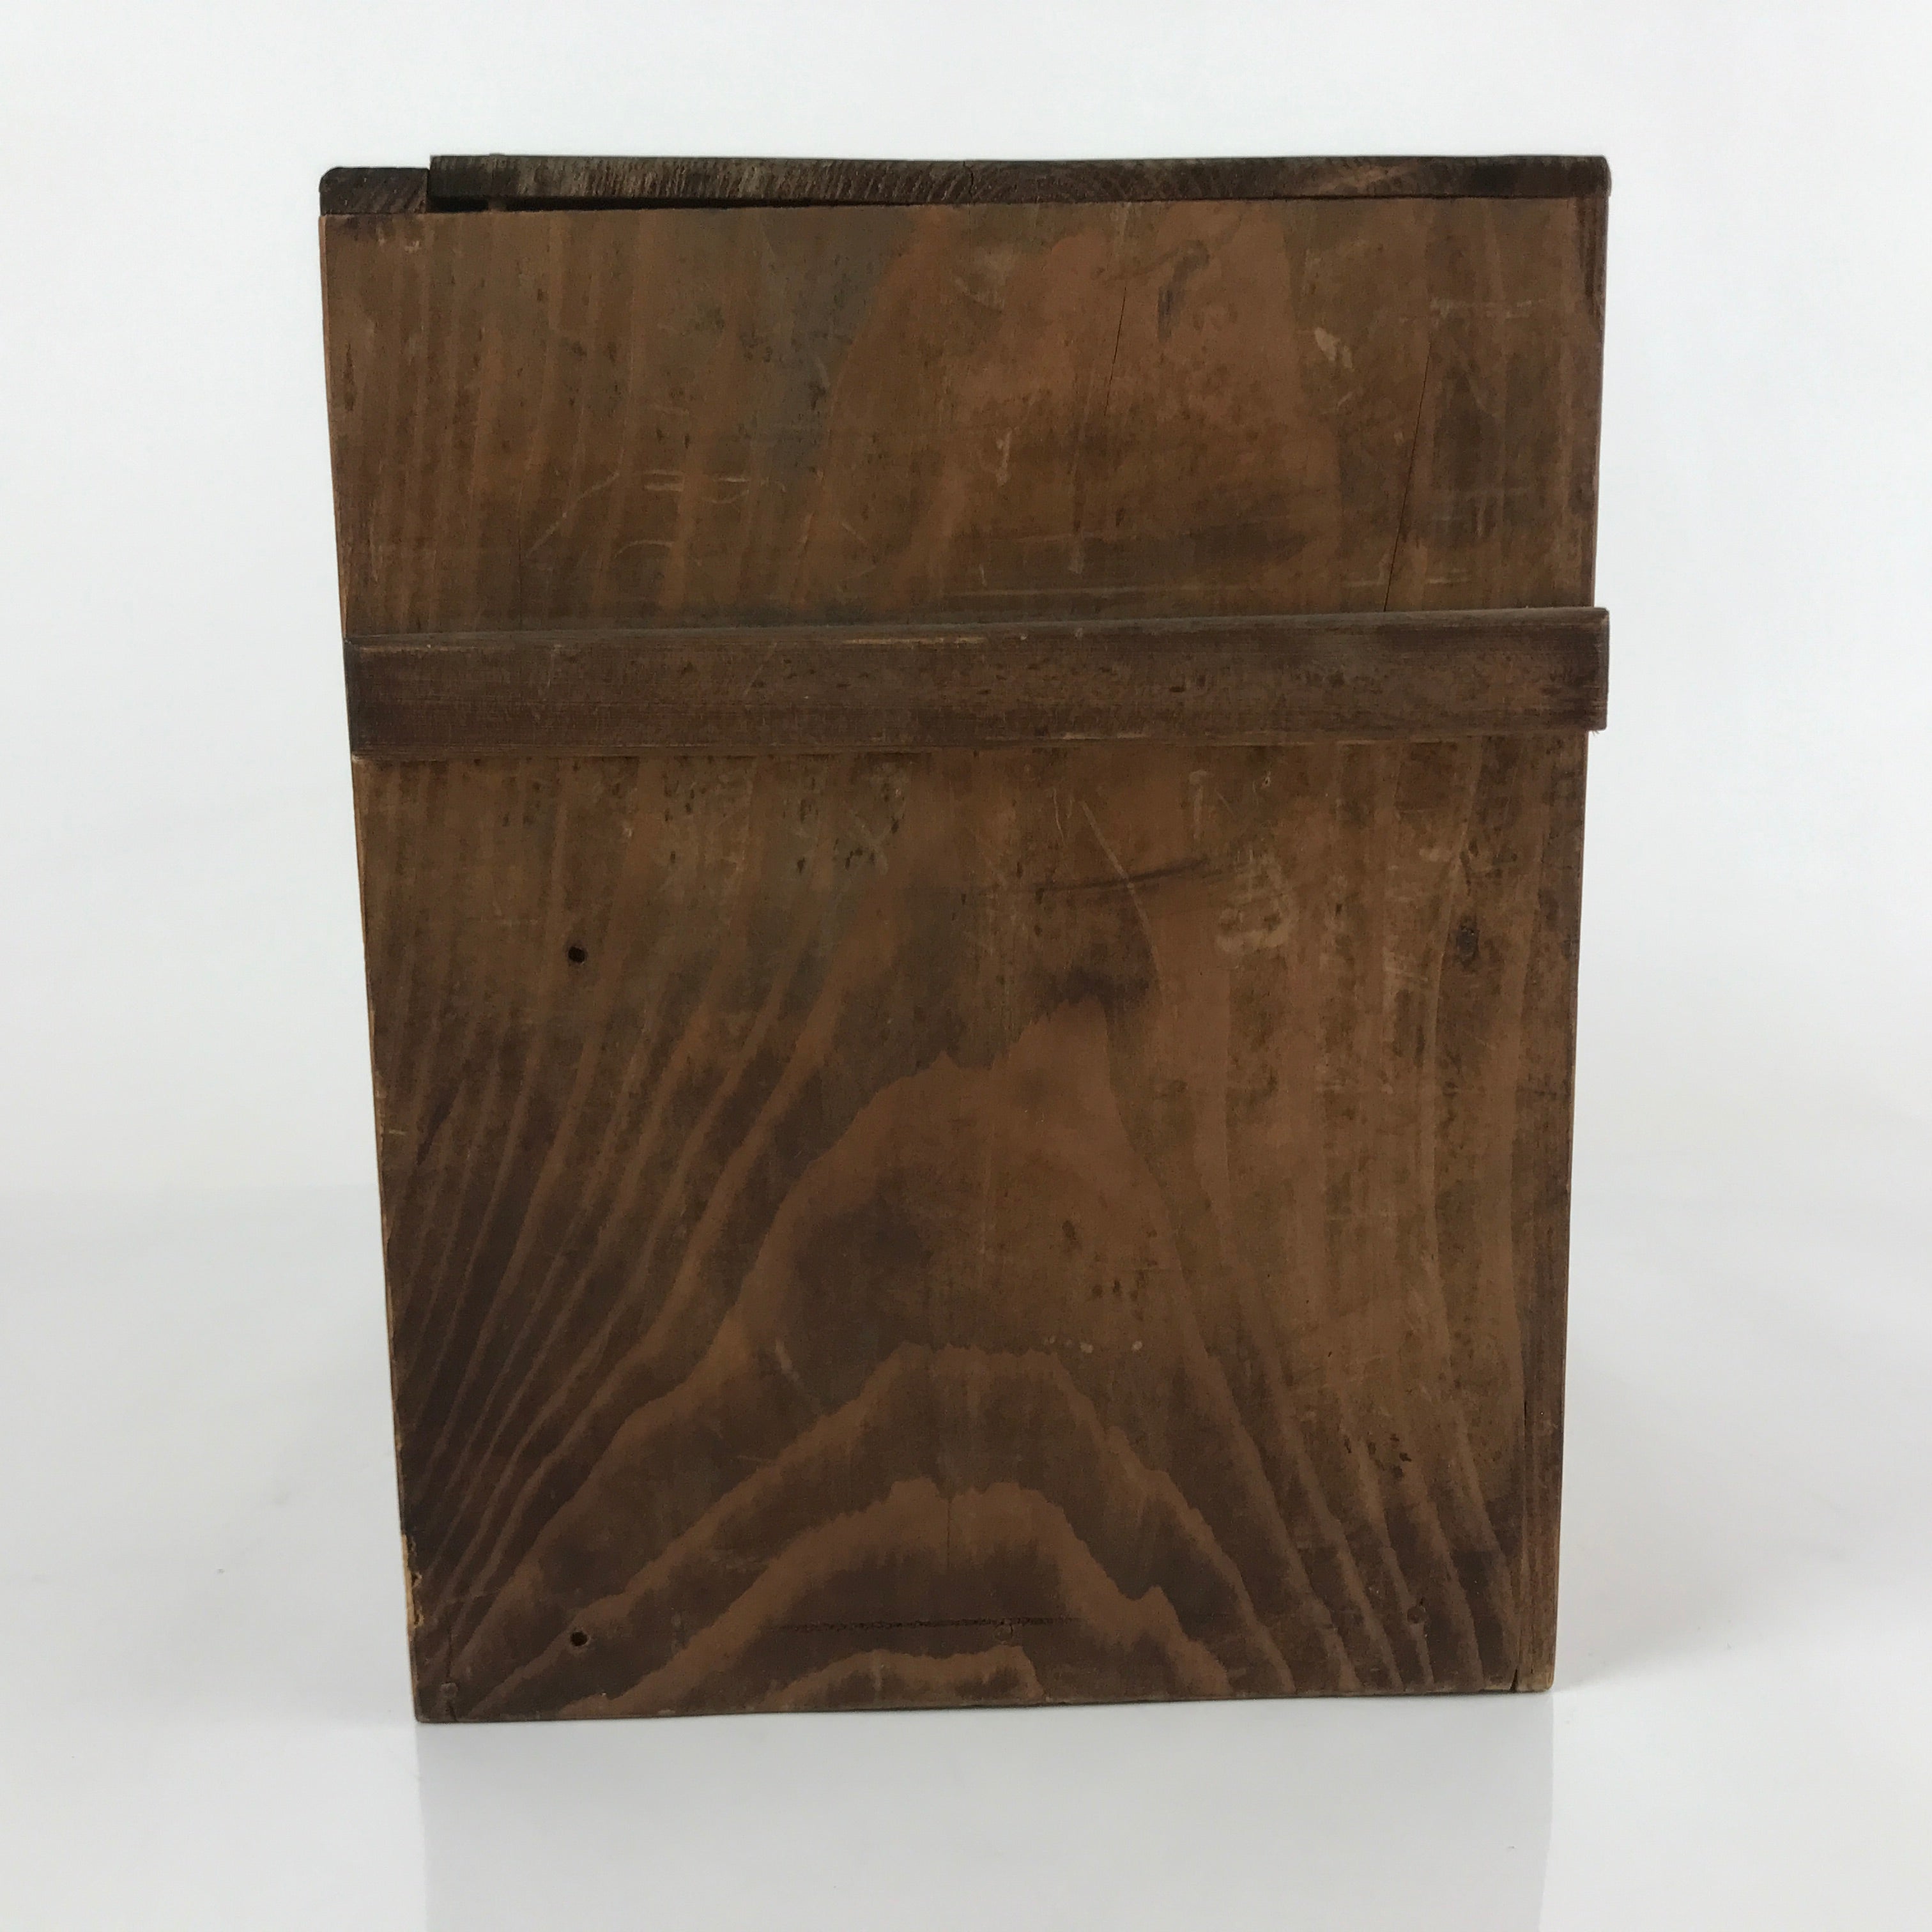 Vintage Japanese Wooden Lidded Storage Box Inside 16.5x23.5x22cm Brown X133